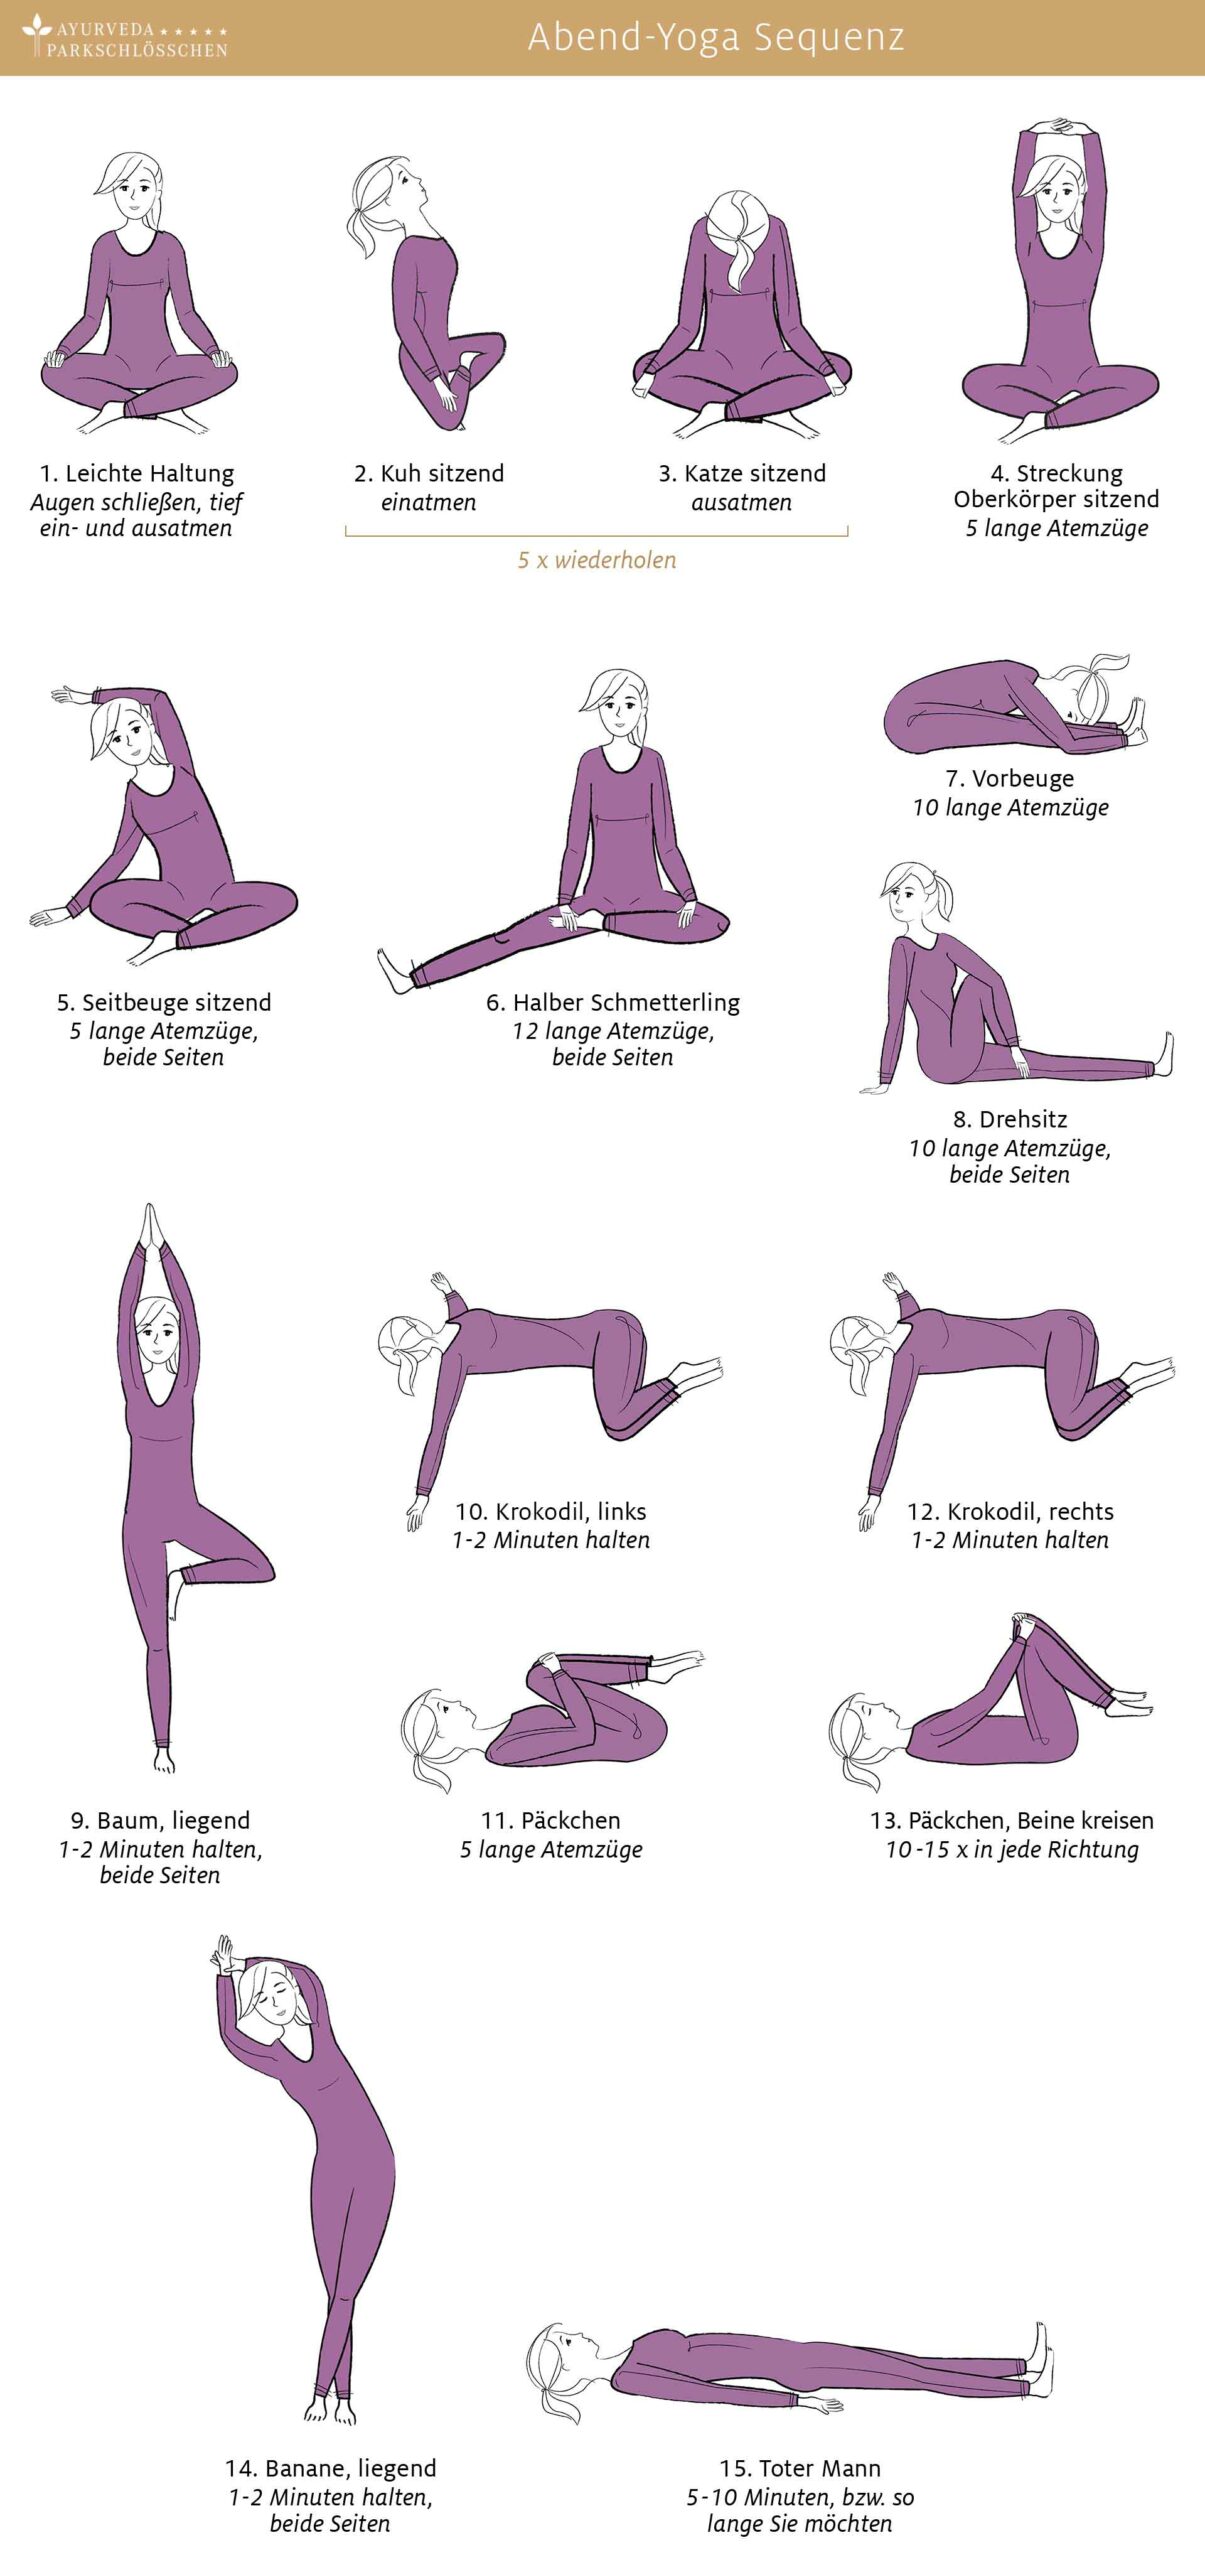 Abend-Yoga Sequence Abfolge | Ayurveda Parkschlösschen